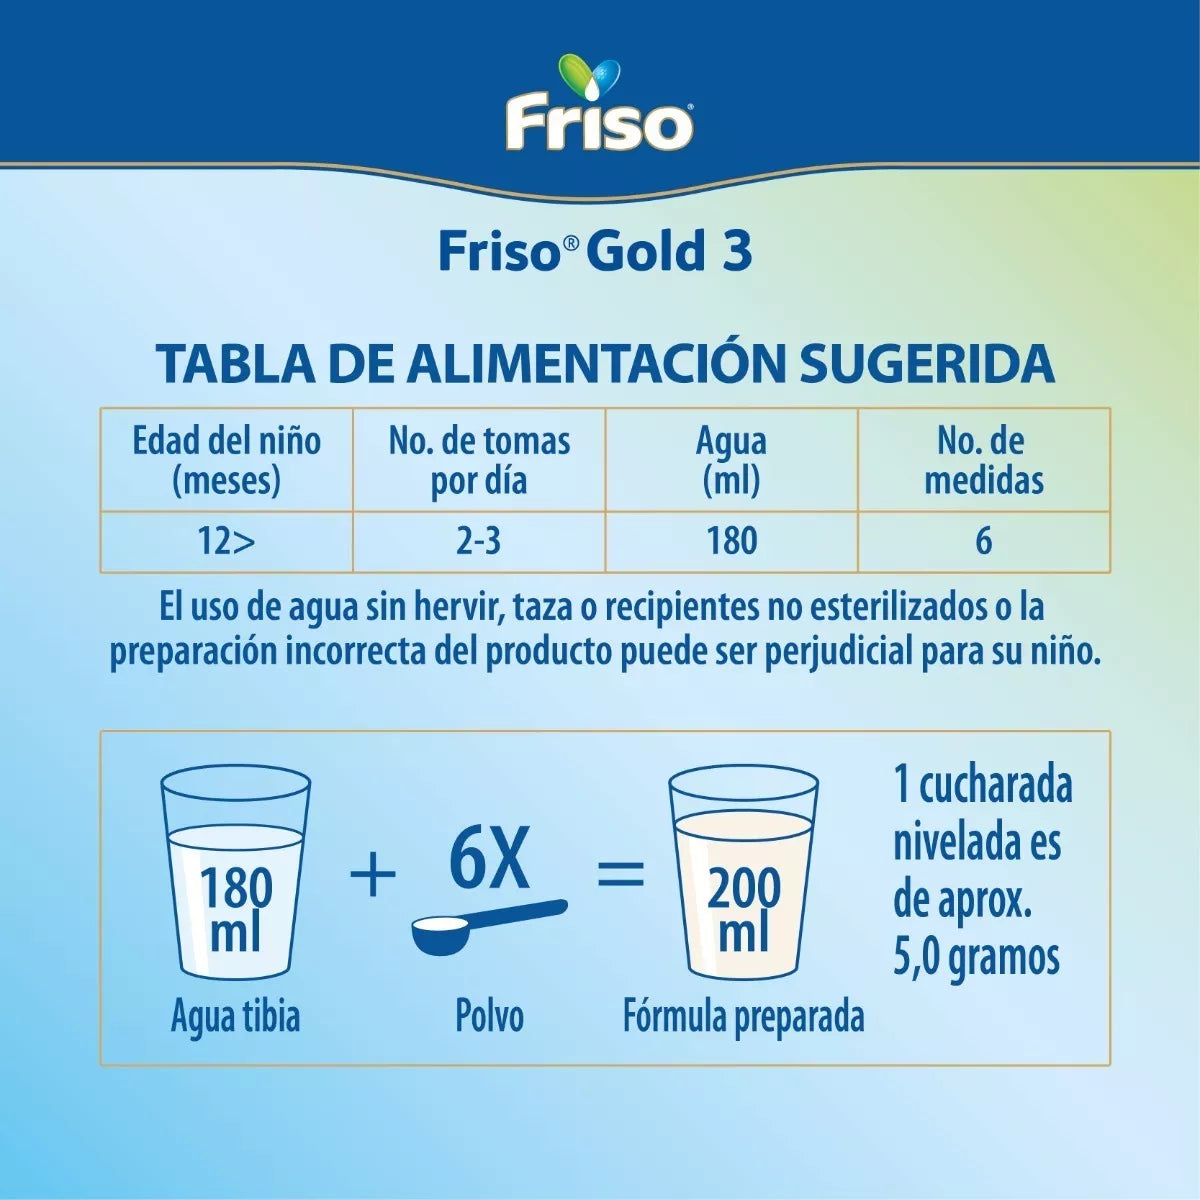 Friso Gold 3 (1-3 Años) Lata C/ 800 Gr